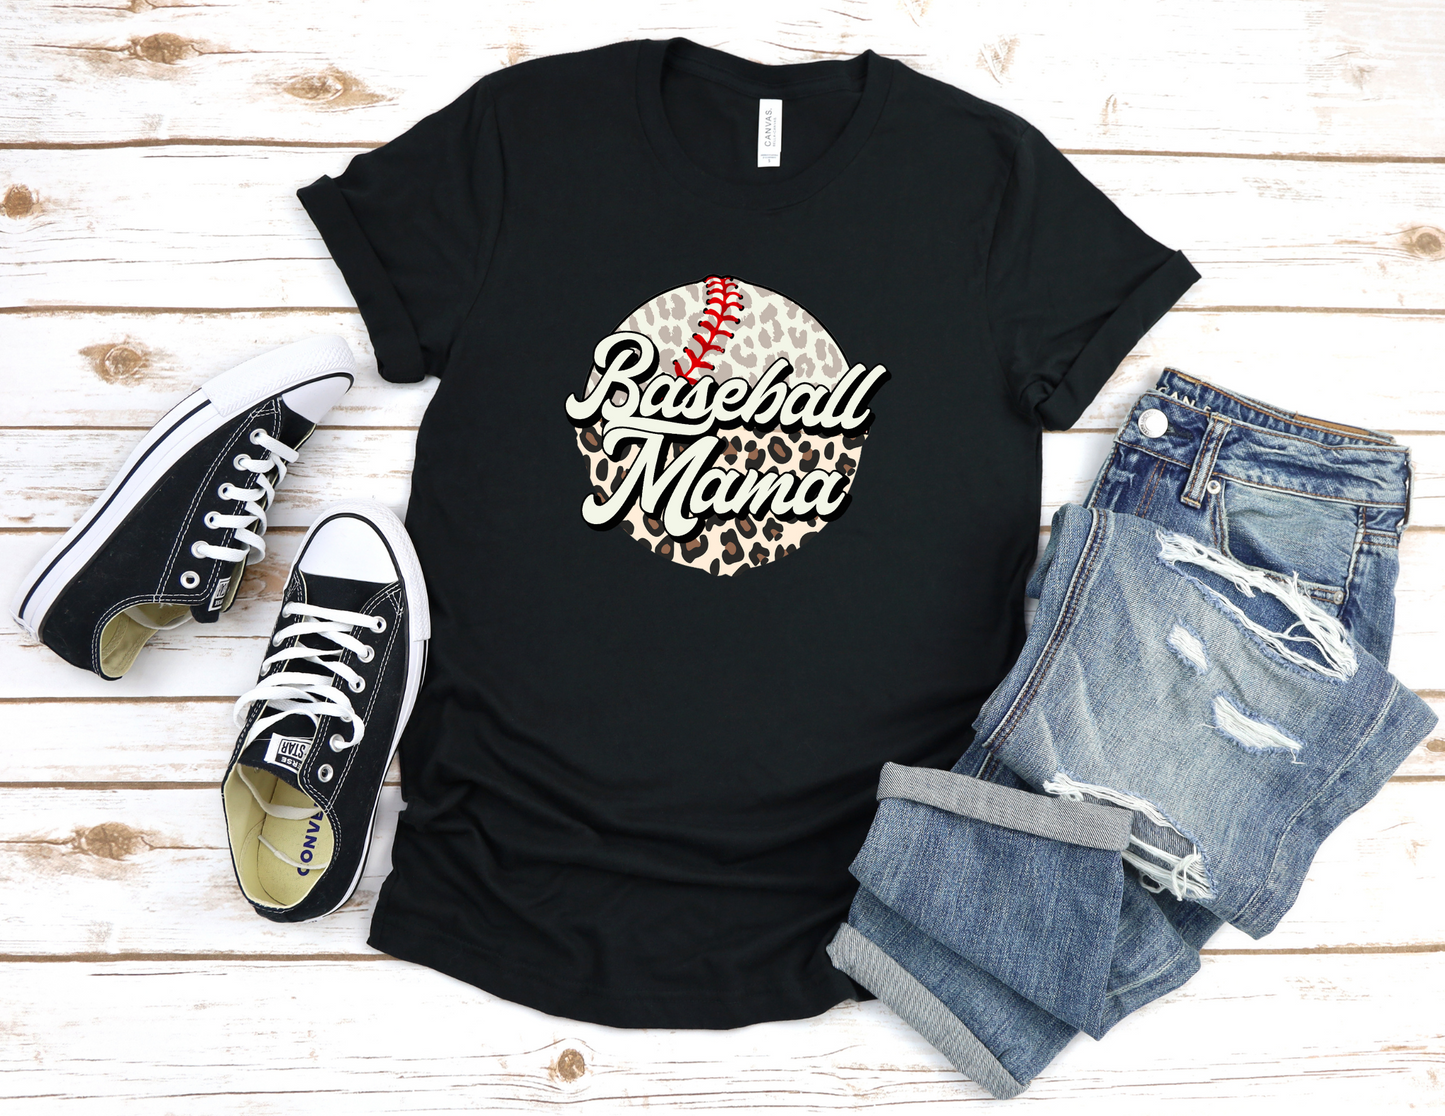 Baseball Mom Cheetah Baseball T-Shirt